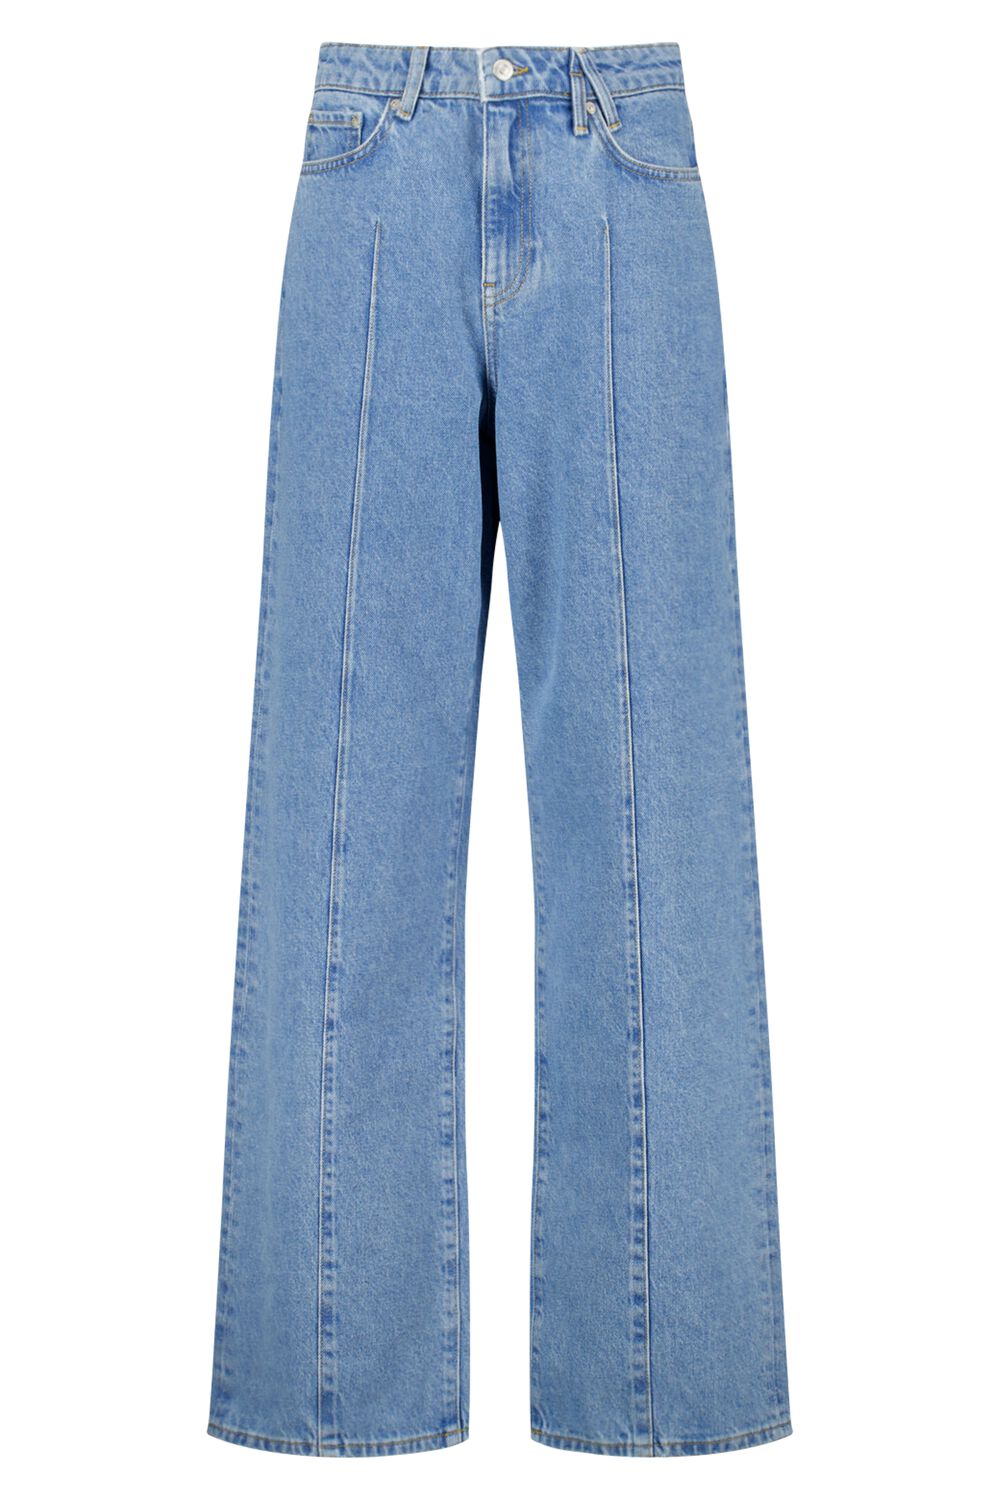 America Today Dames Jeans Tulsa Blauw